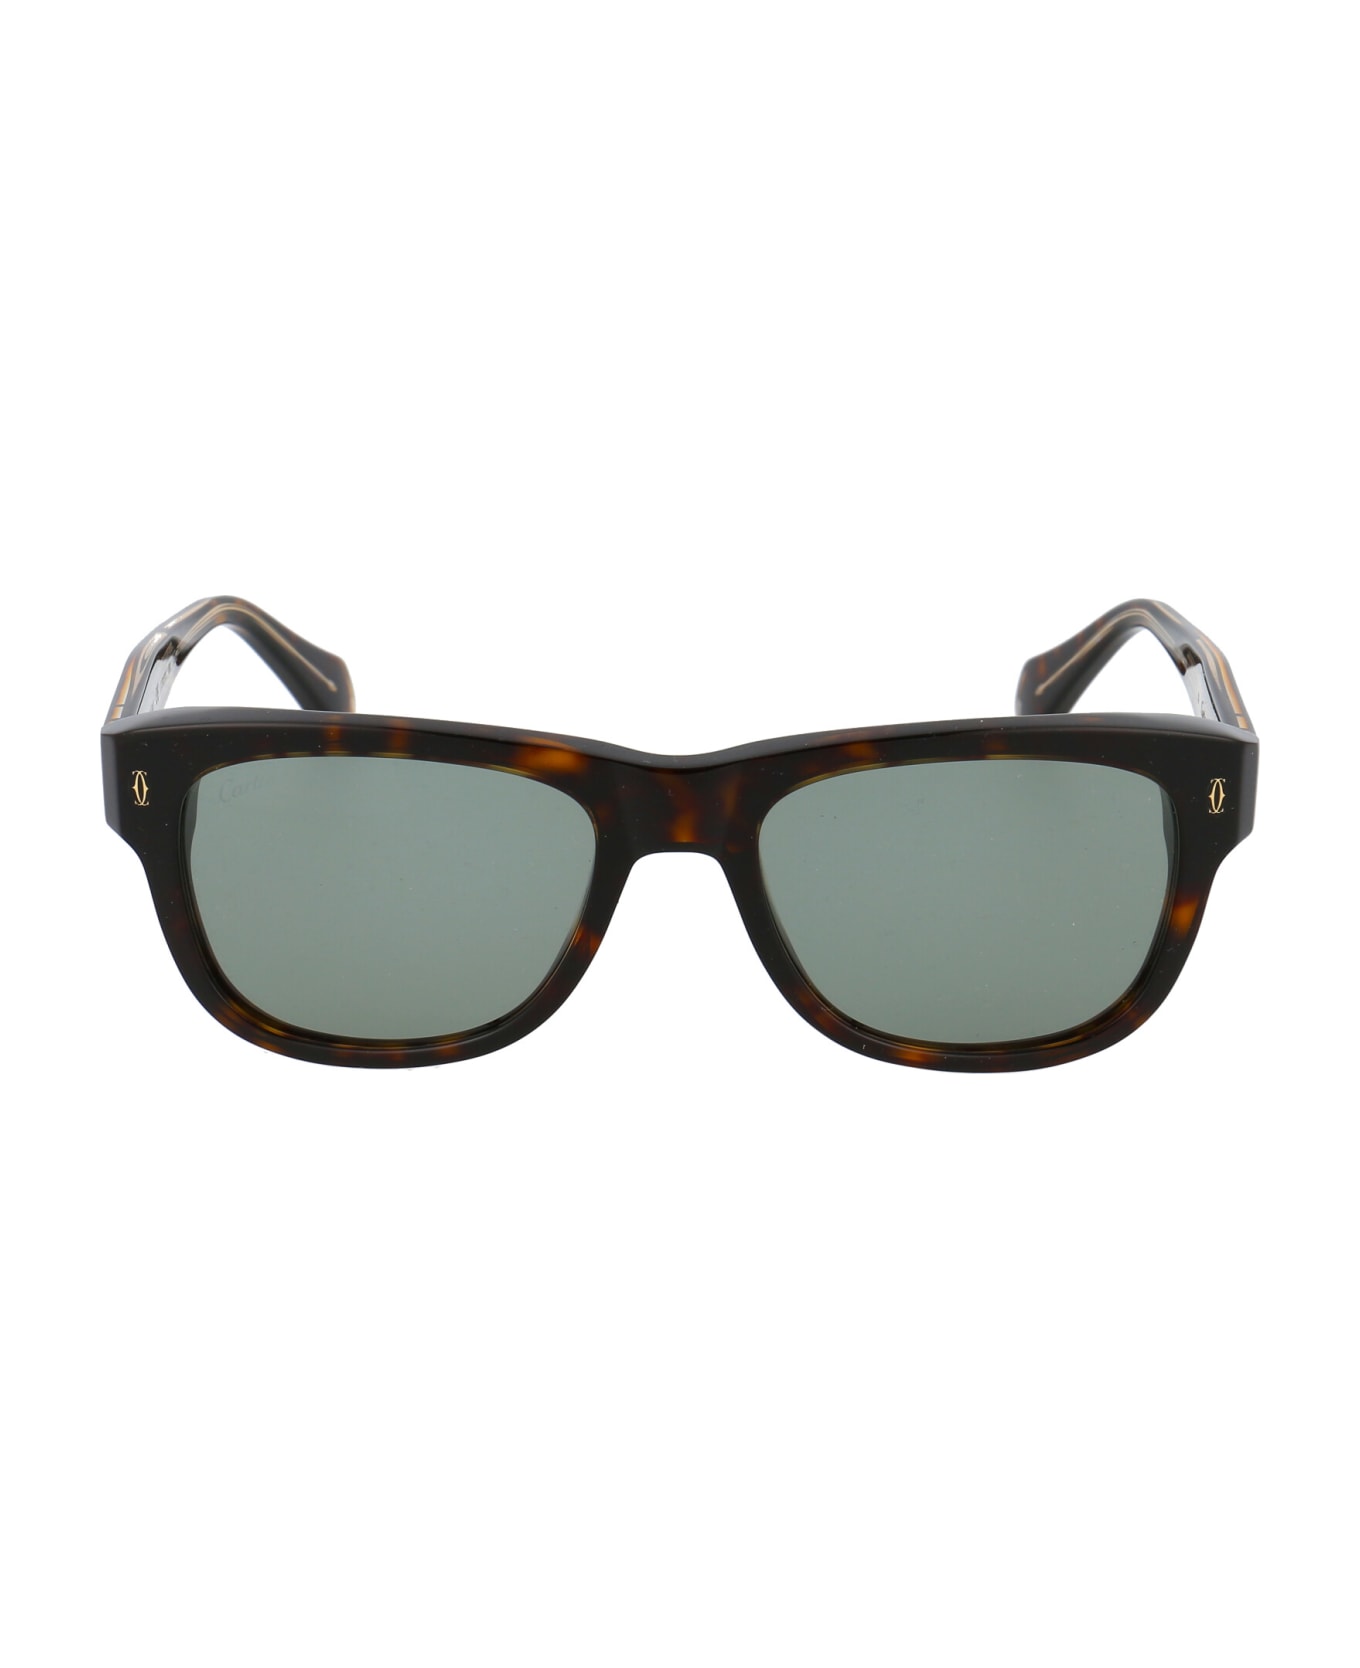 Cartier Eyewear Ct0277s Sunglasses - 002 HAVANA HAVANA GREEN サングラス